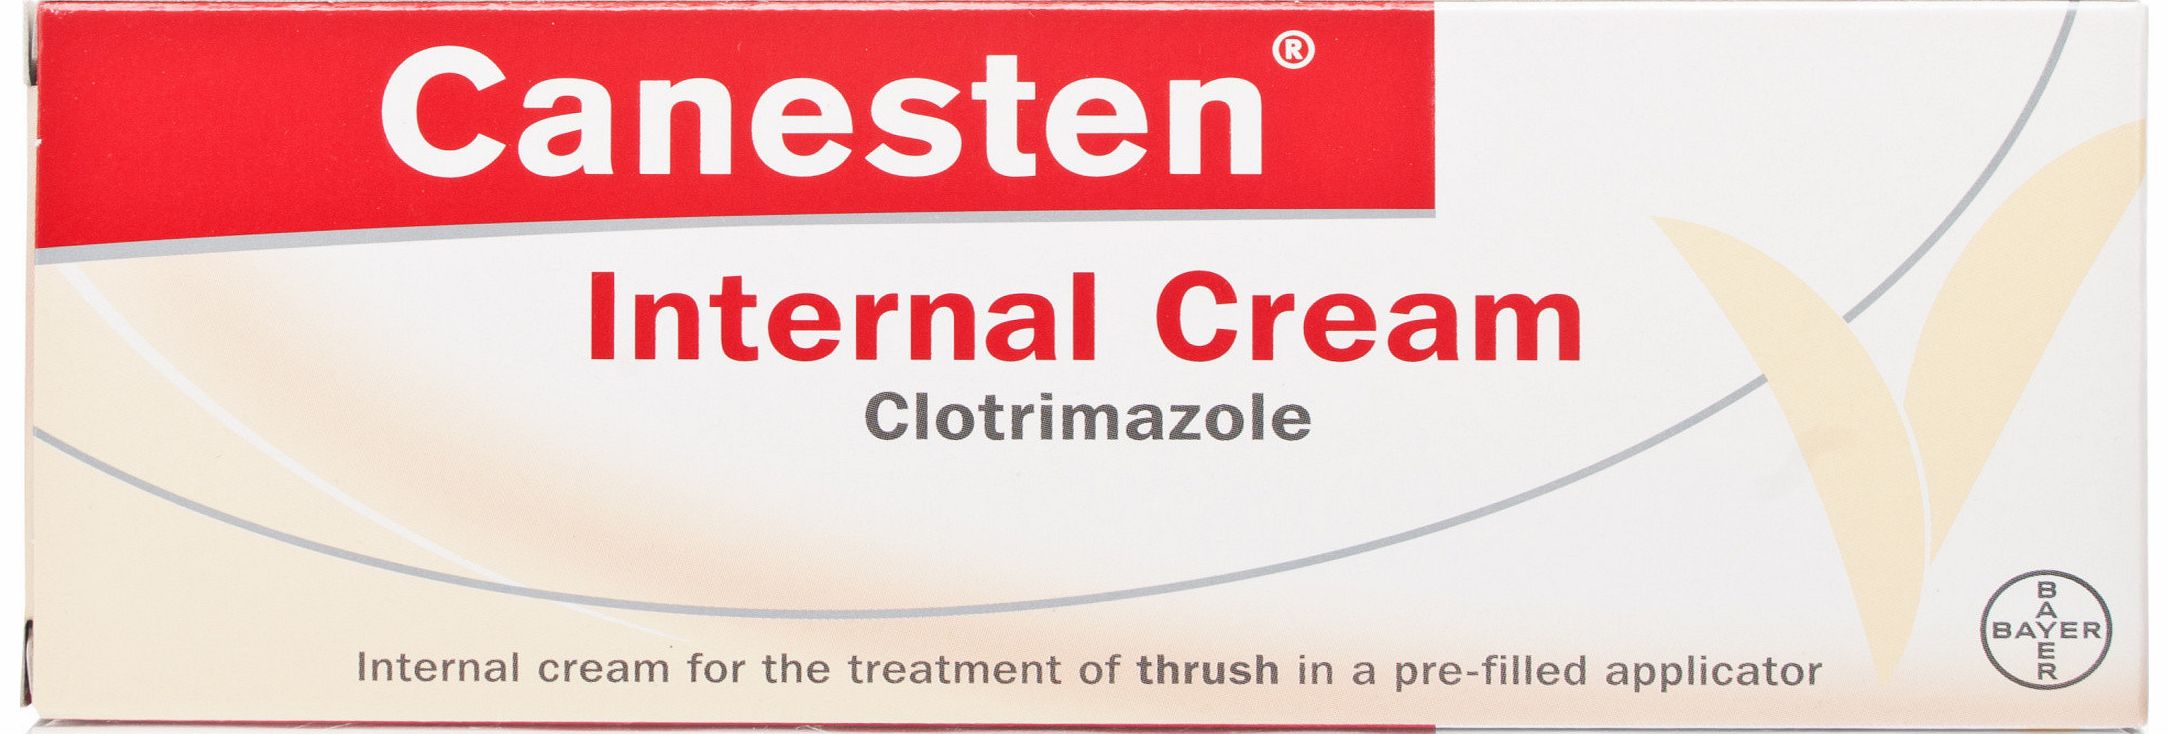 Canesten Internal Cream (formerly Canesten Once)